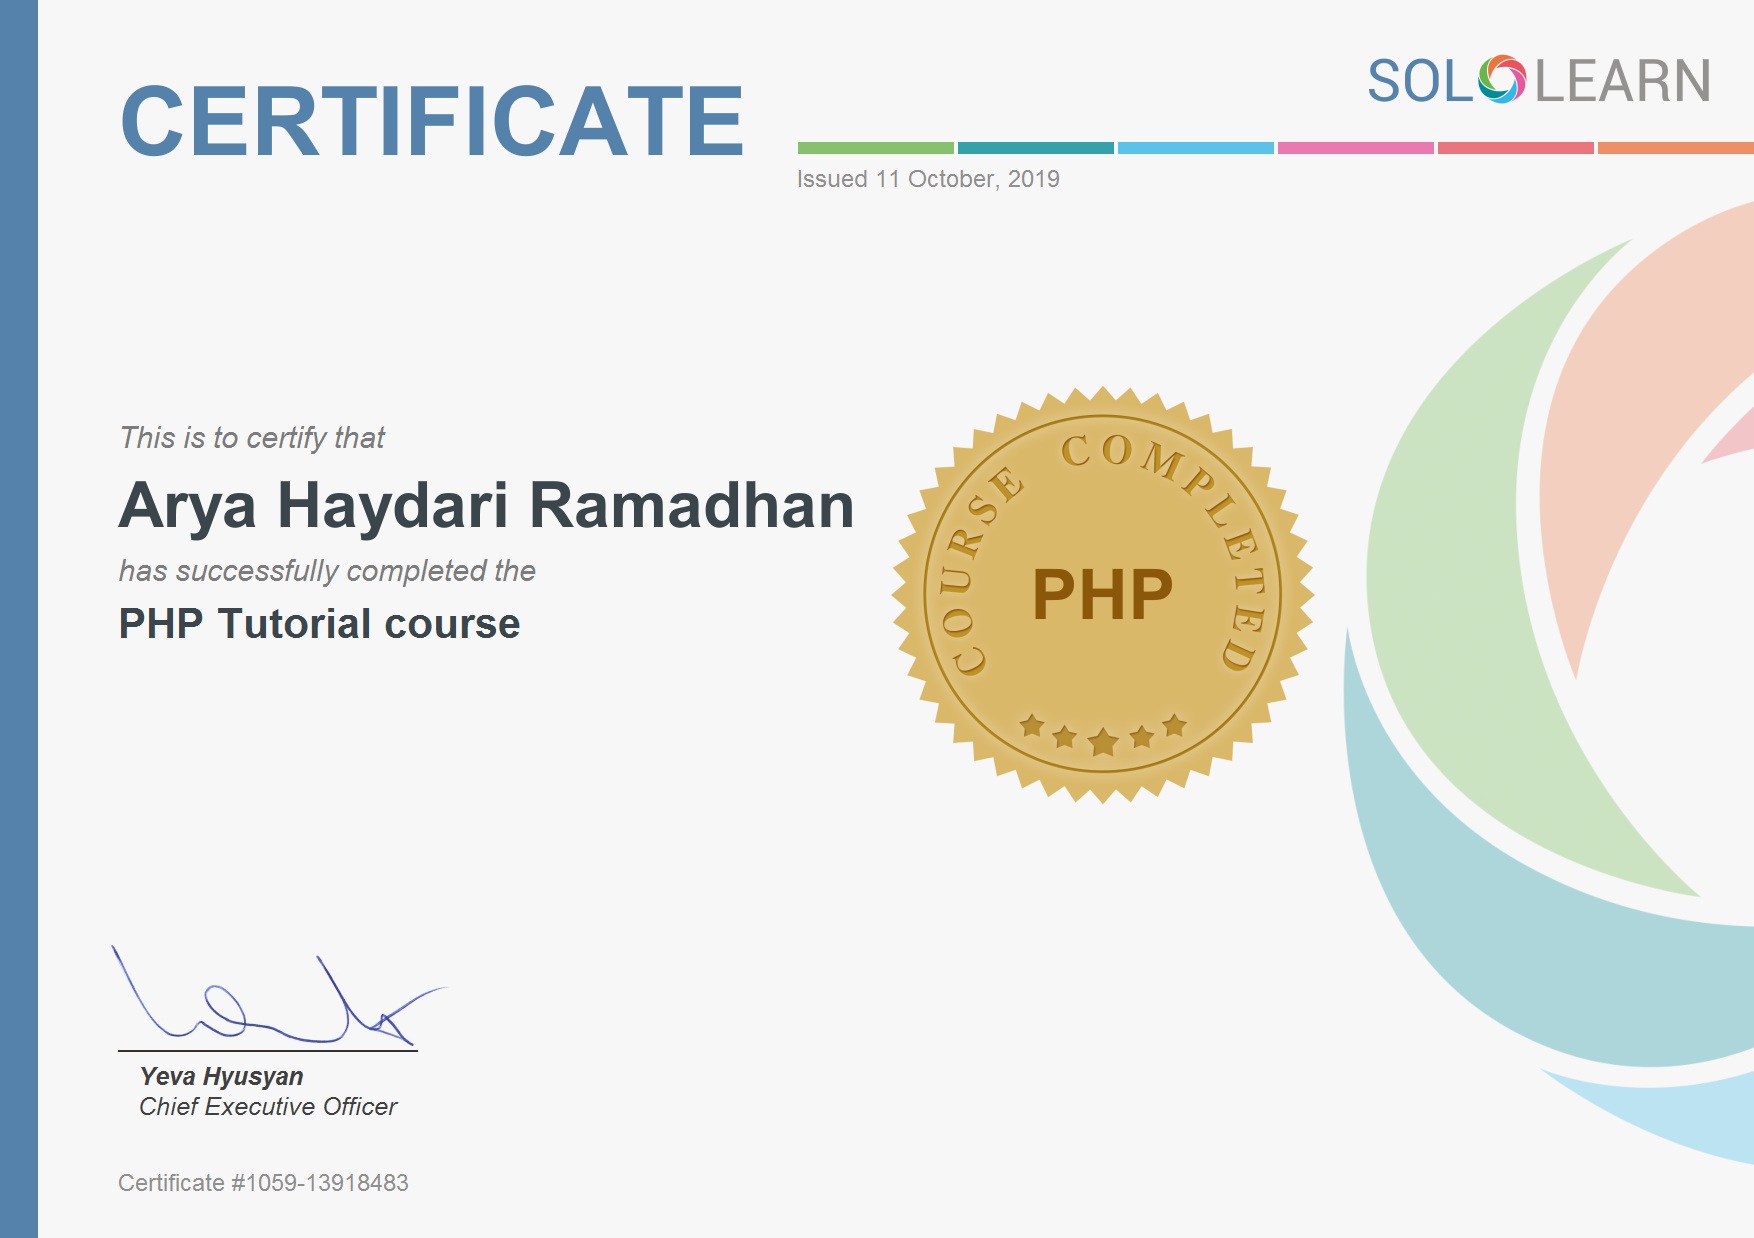 PHP Certificate - Sololearn